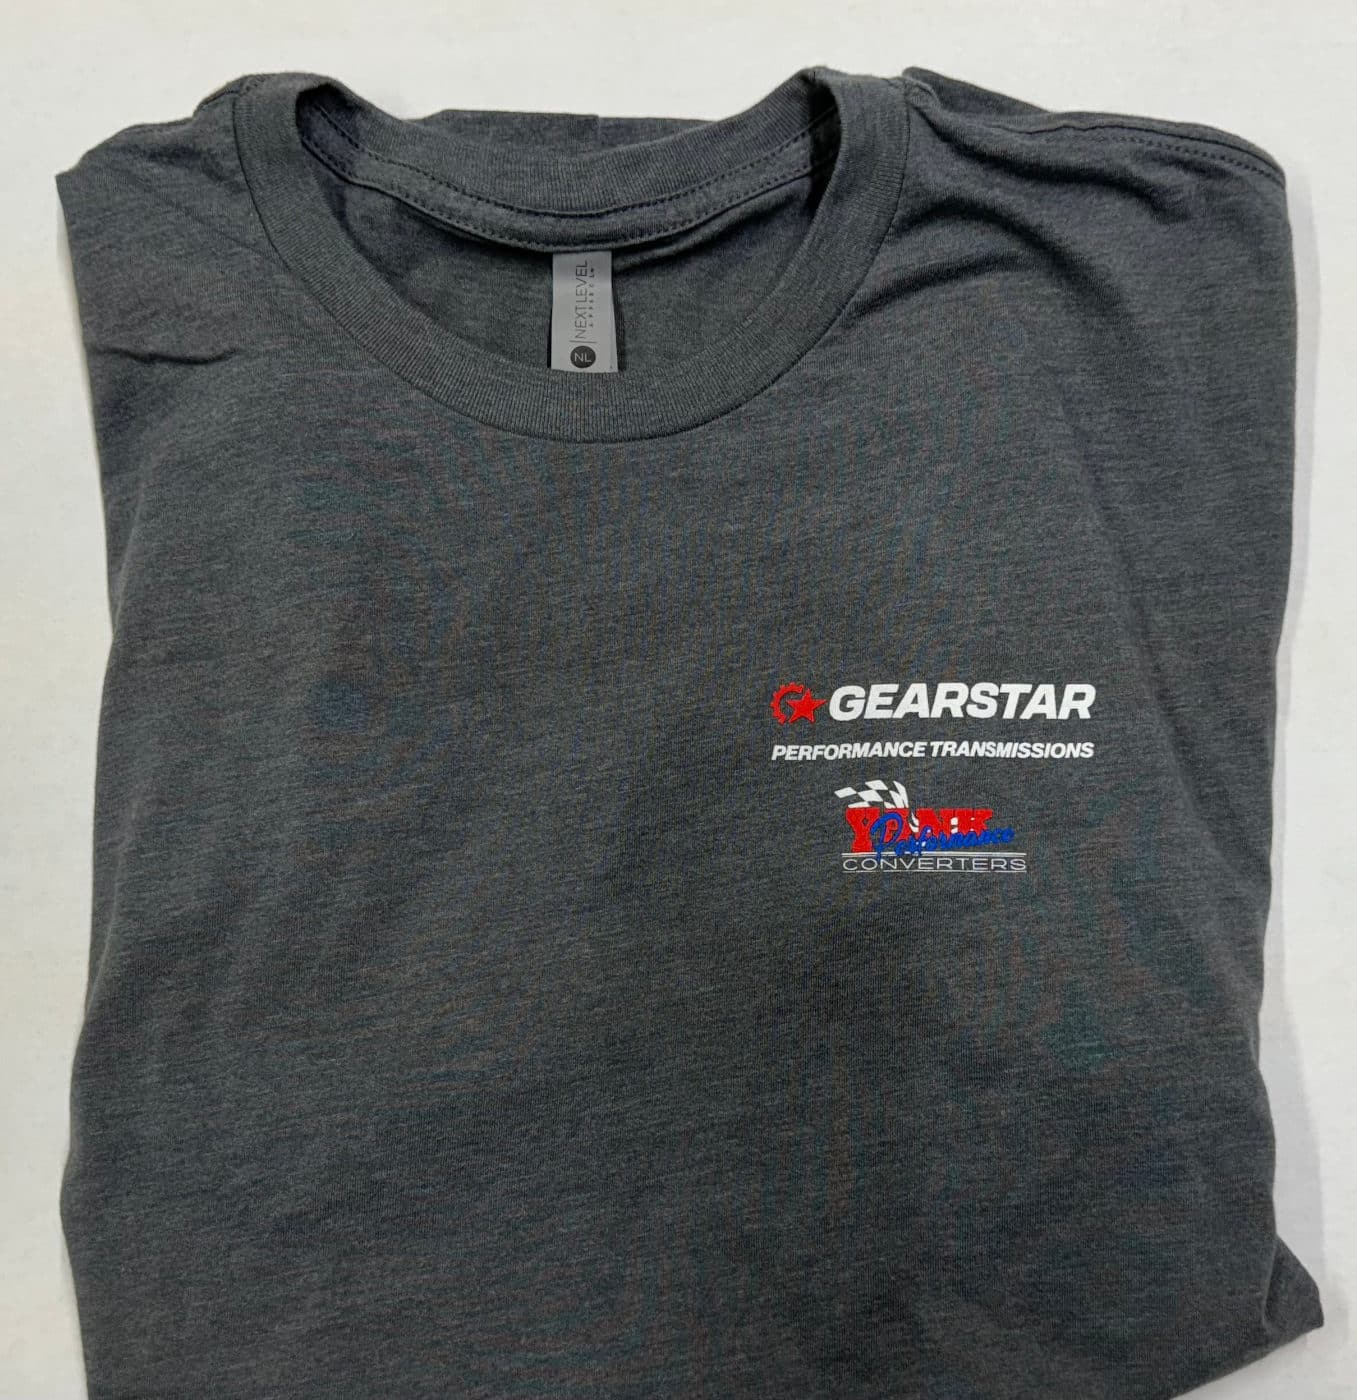 Dark Gray T-Shirt with Gearstar logo on breast